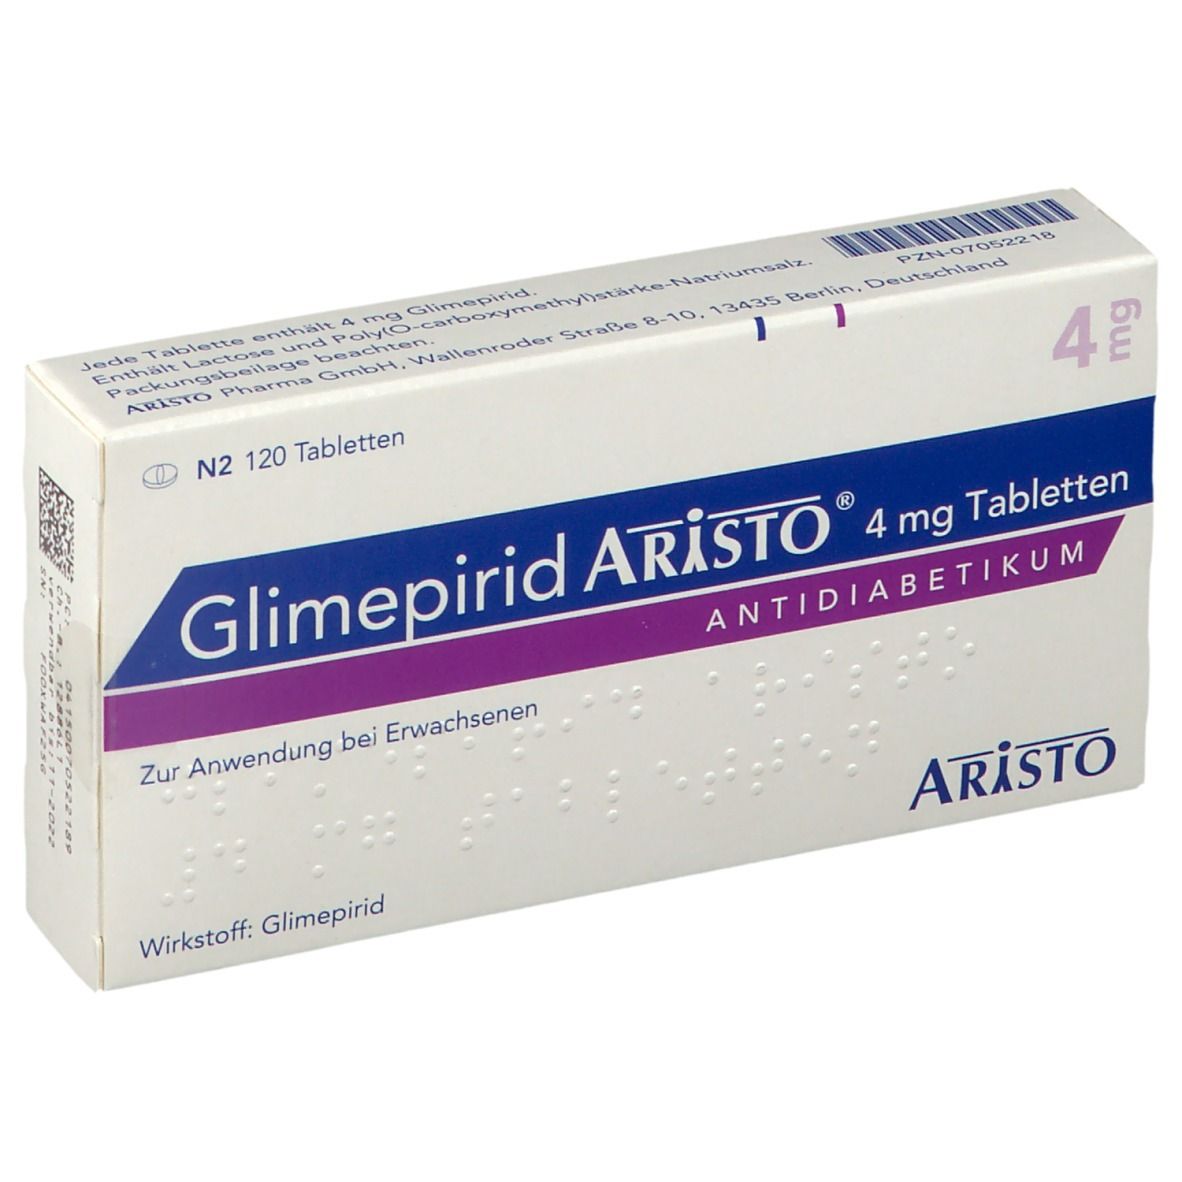 Glimepirid Aristo® 4 mg